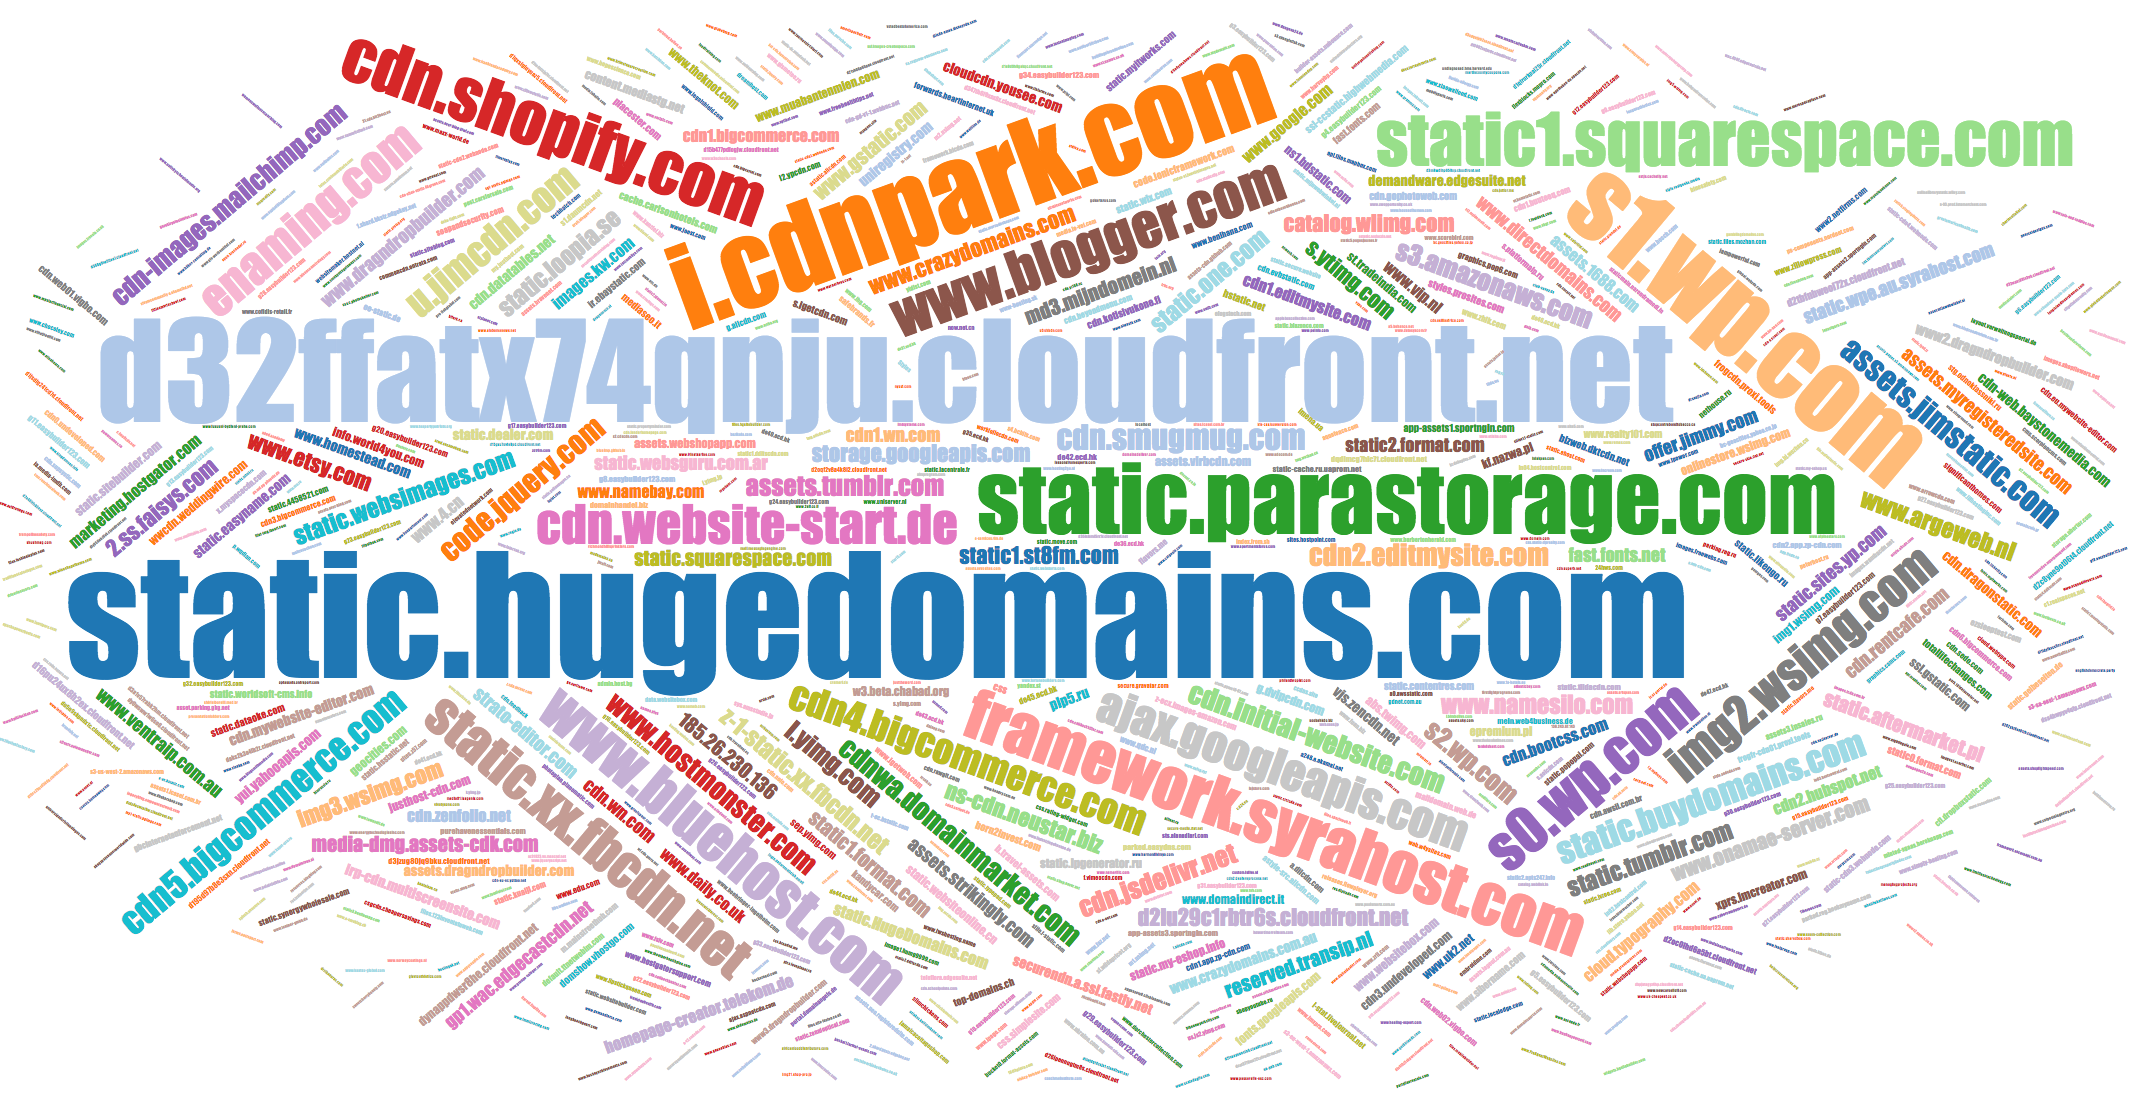 Popular names of CSS domains z.cdn.turner.com, zoon.ru, etc.